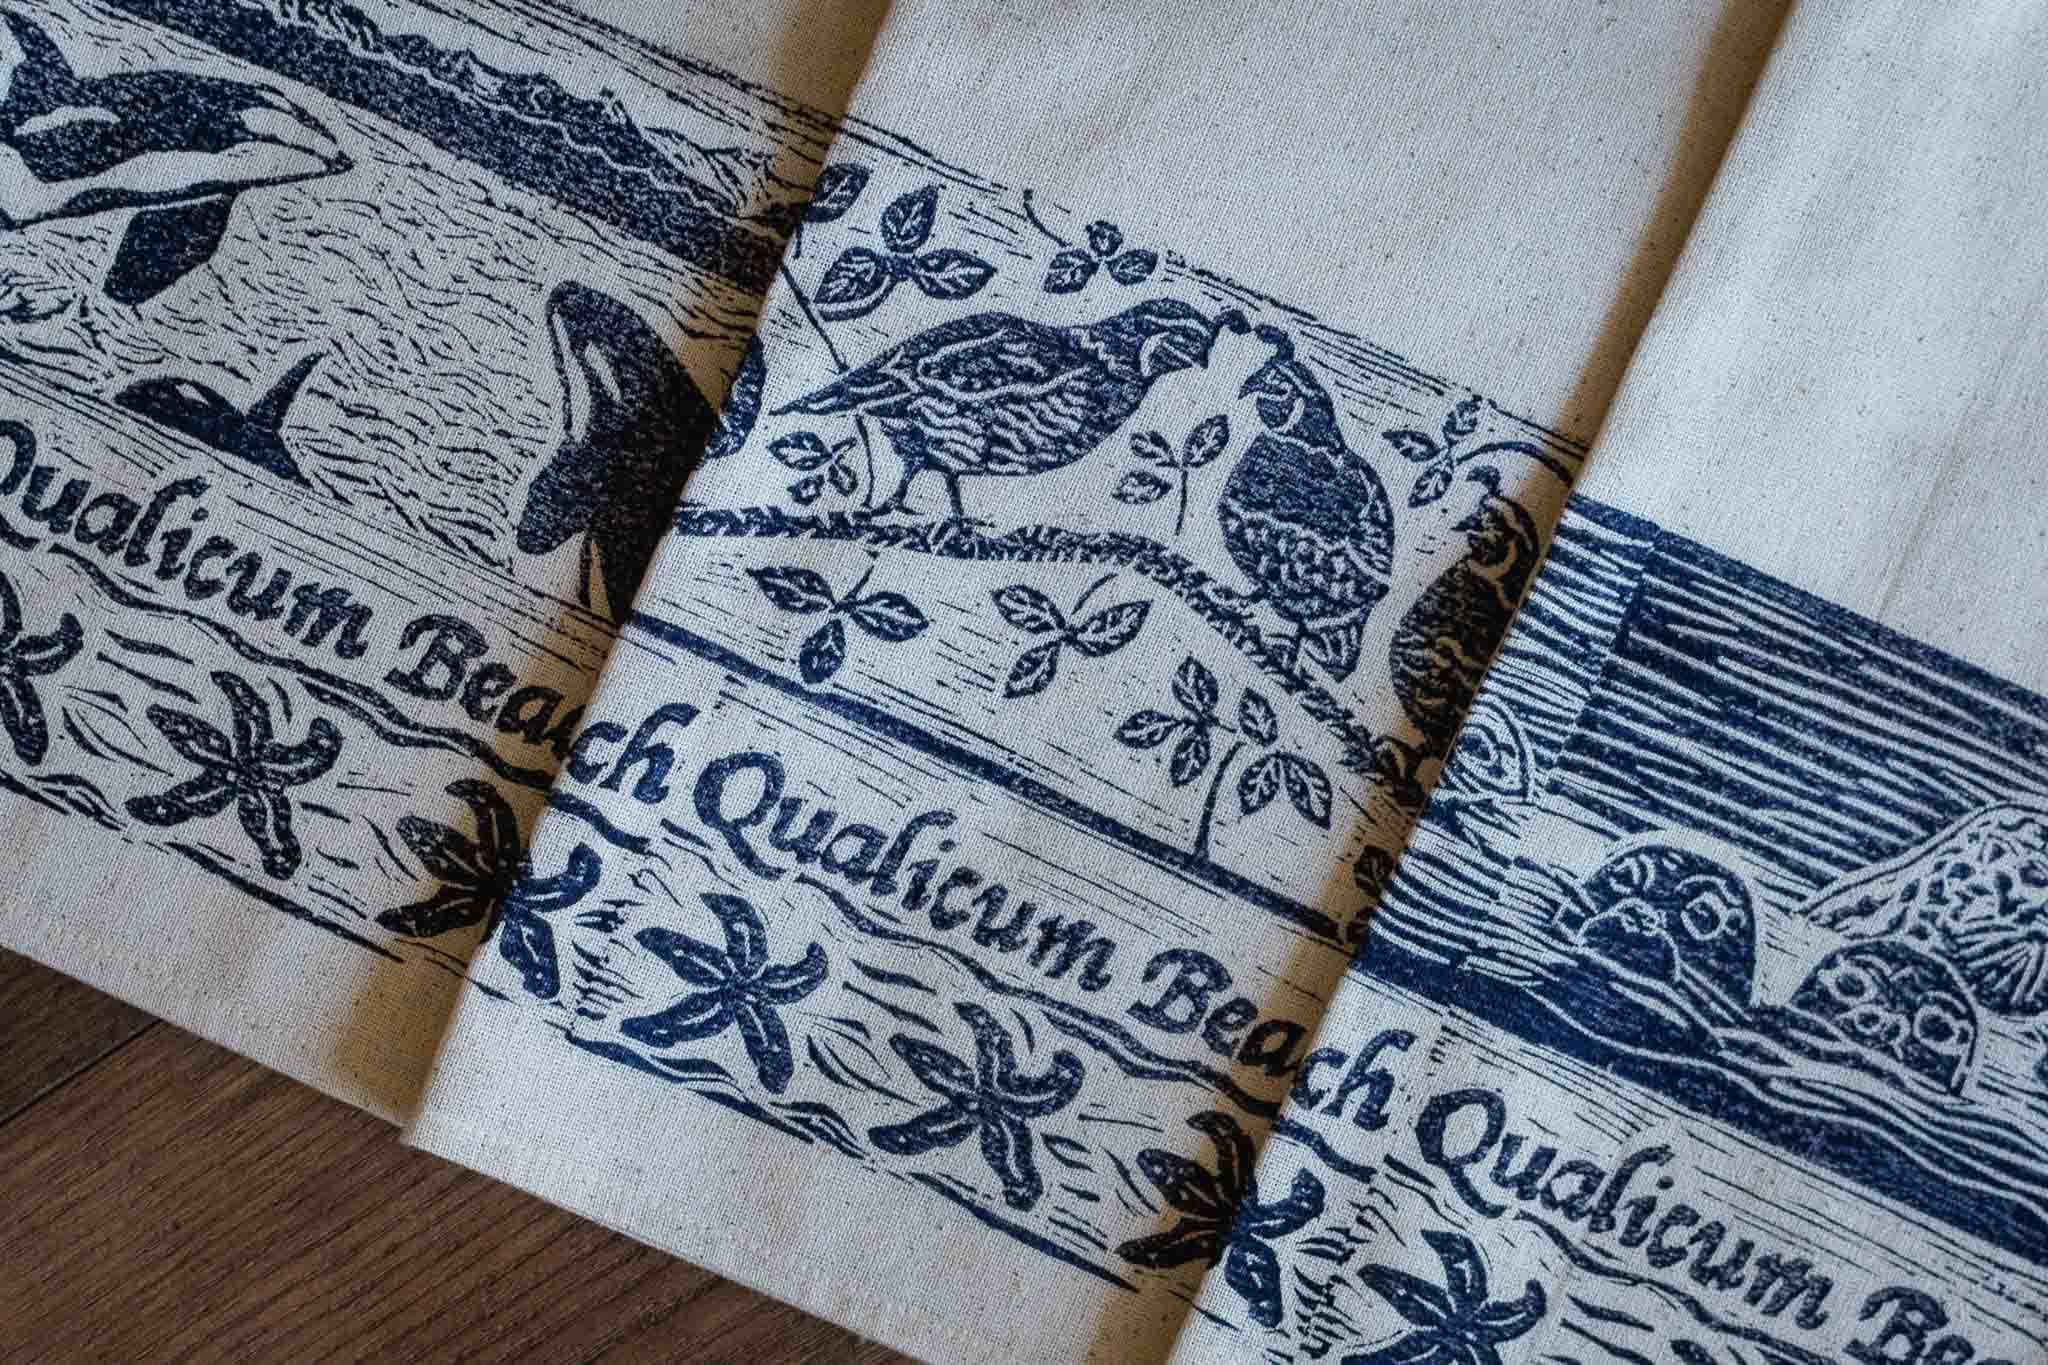 Handprinted Qualicum Beach Tea Towel by Maritime Blues